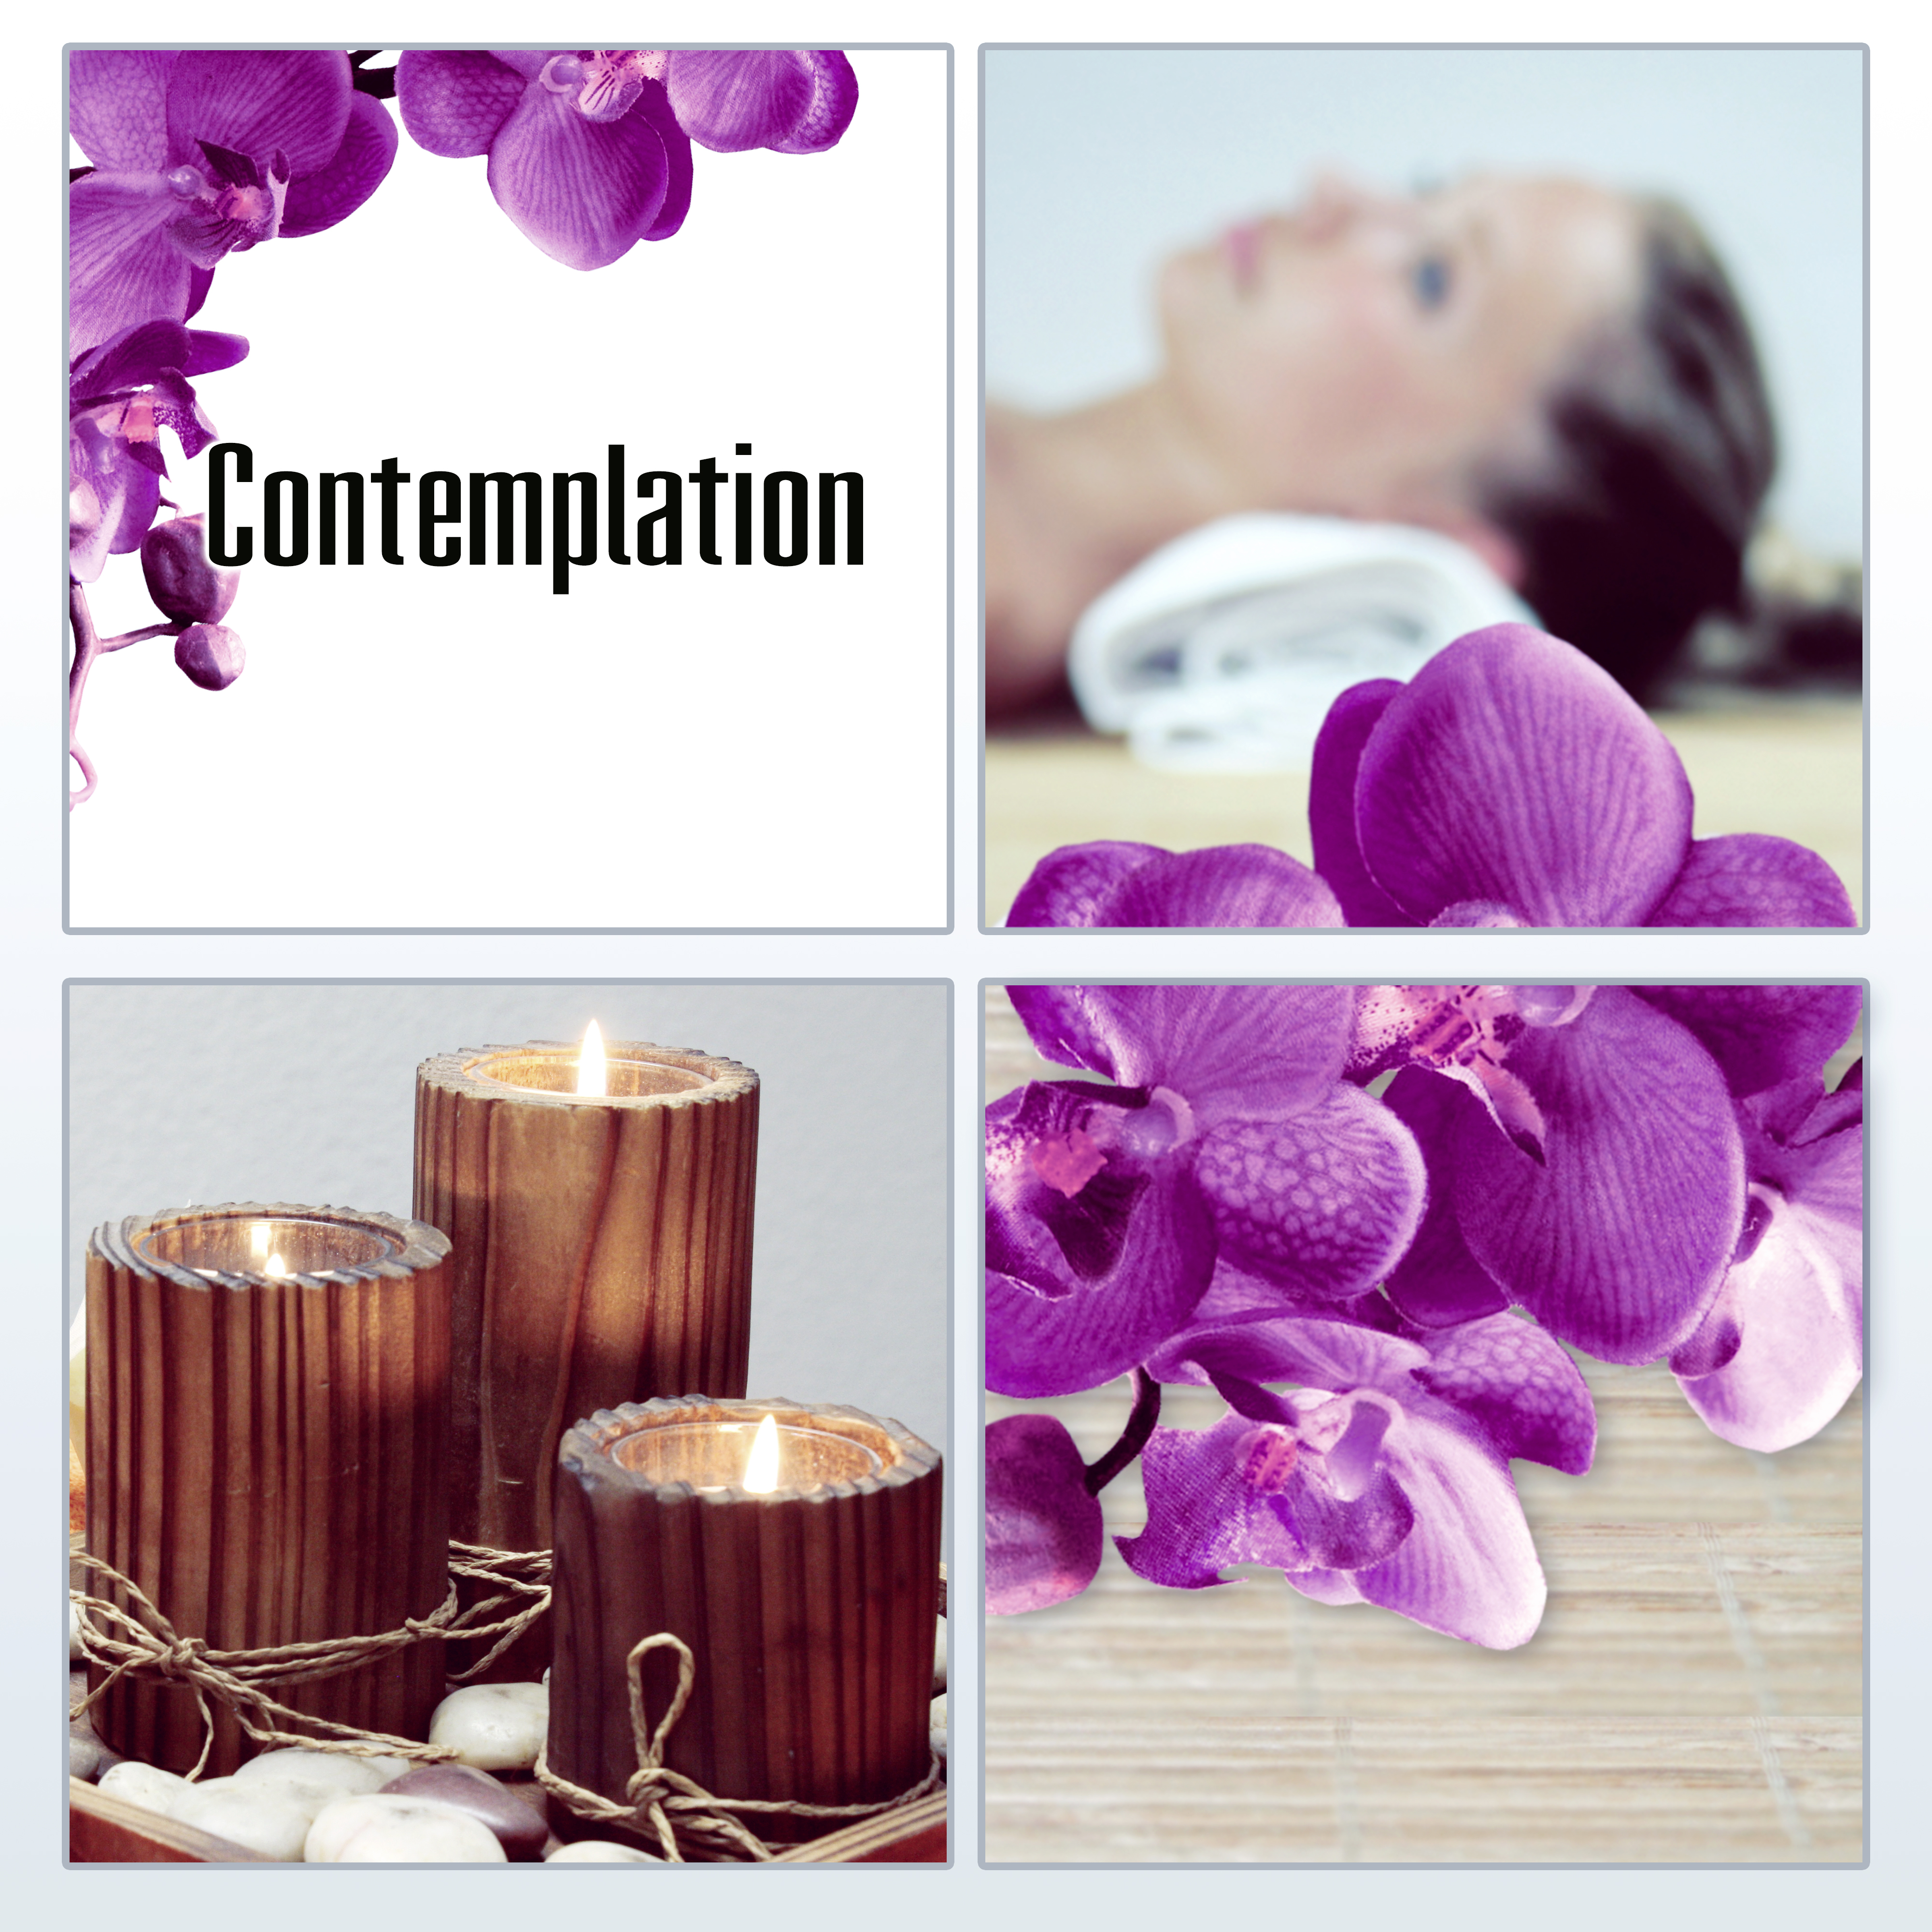 Contemplation - Relaxation, Meditation, Reiki, Wellness, Sleep, Natural White Noise, Reflexology, Shiatsu